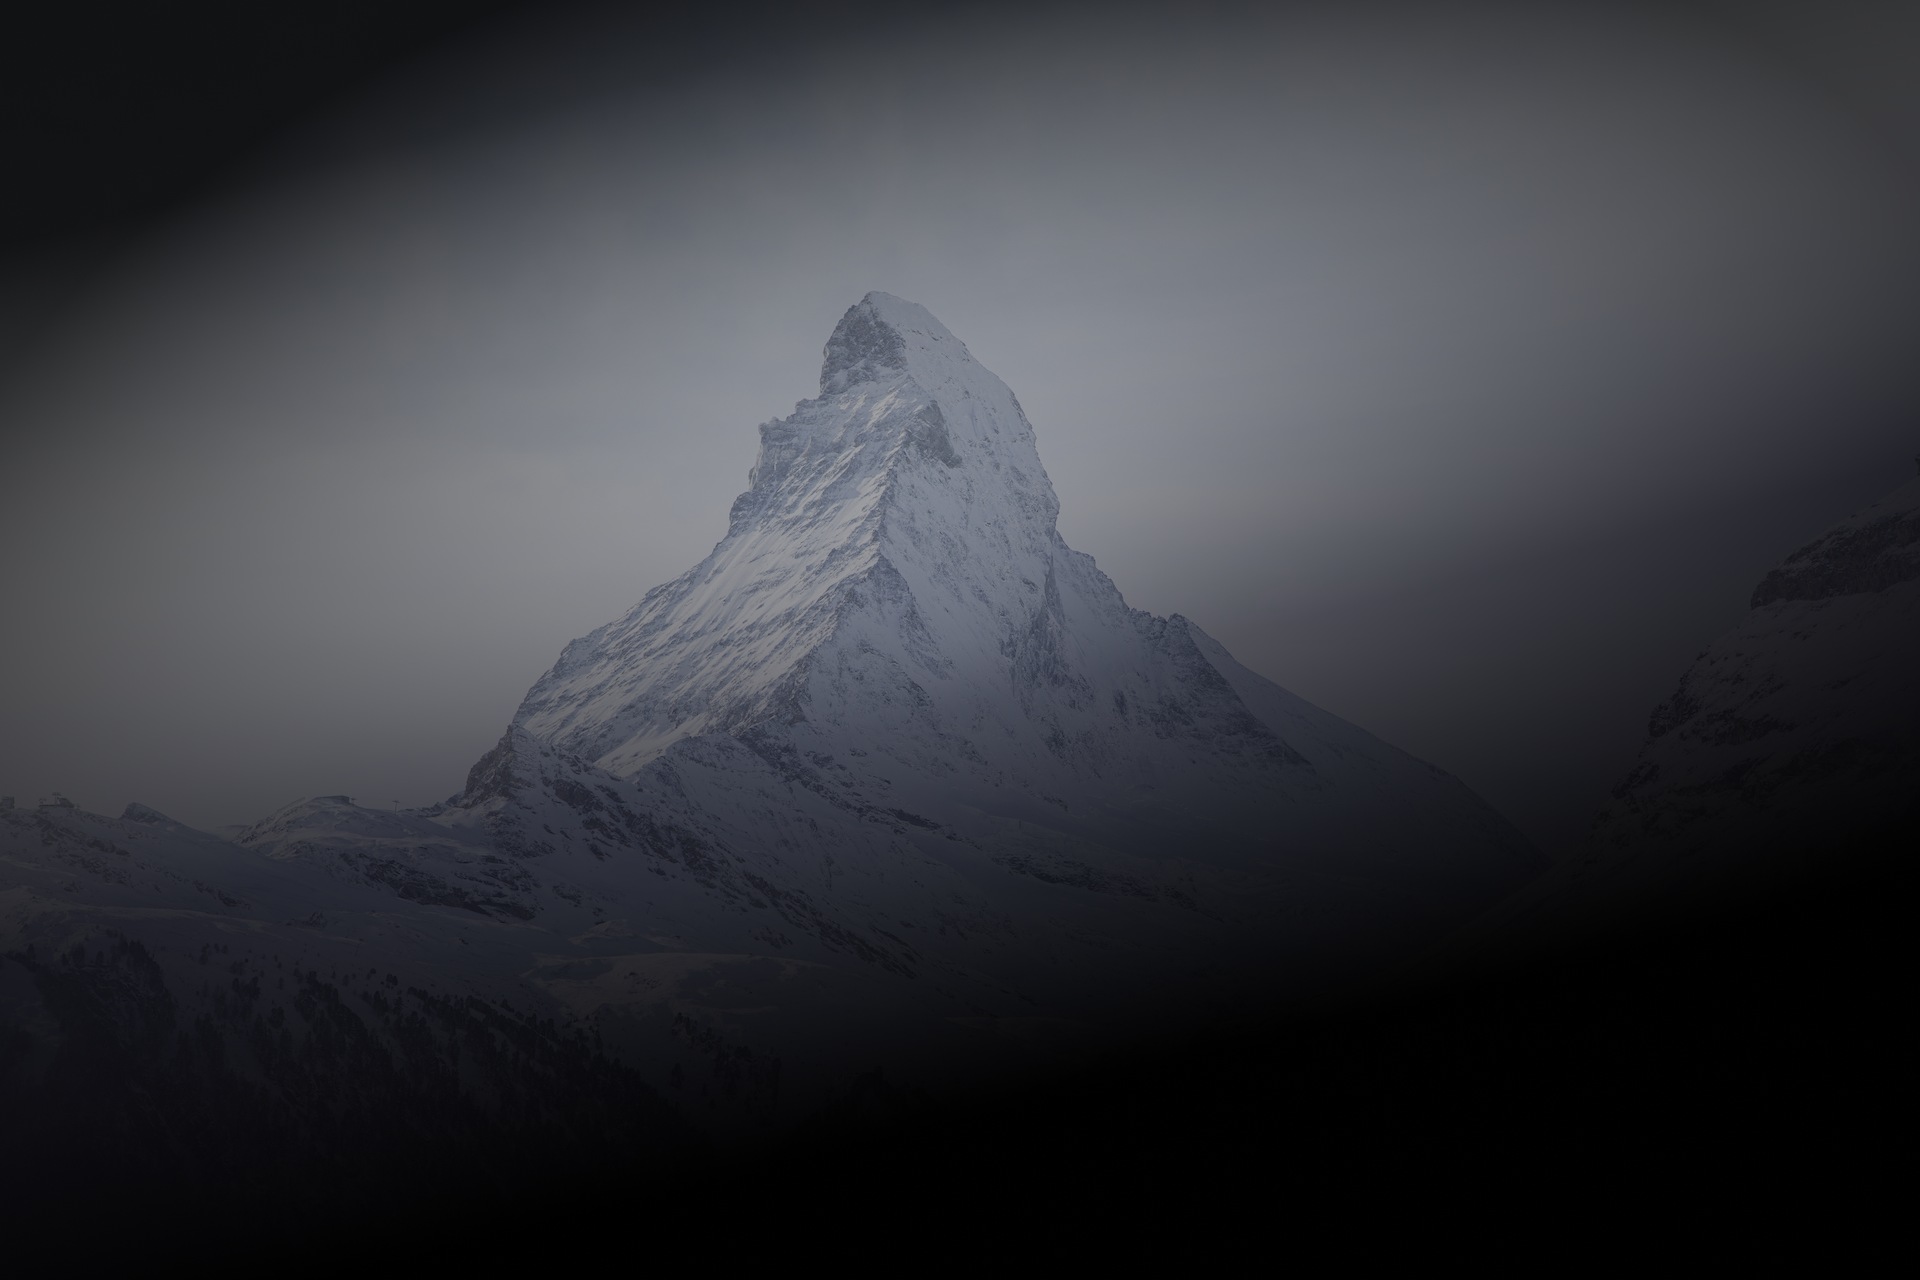 Image of Matterhorn Mountain, inspiring confidence and determination.